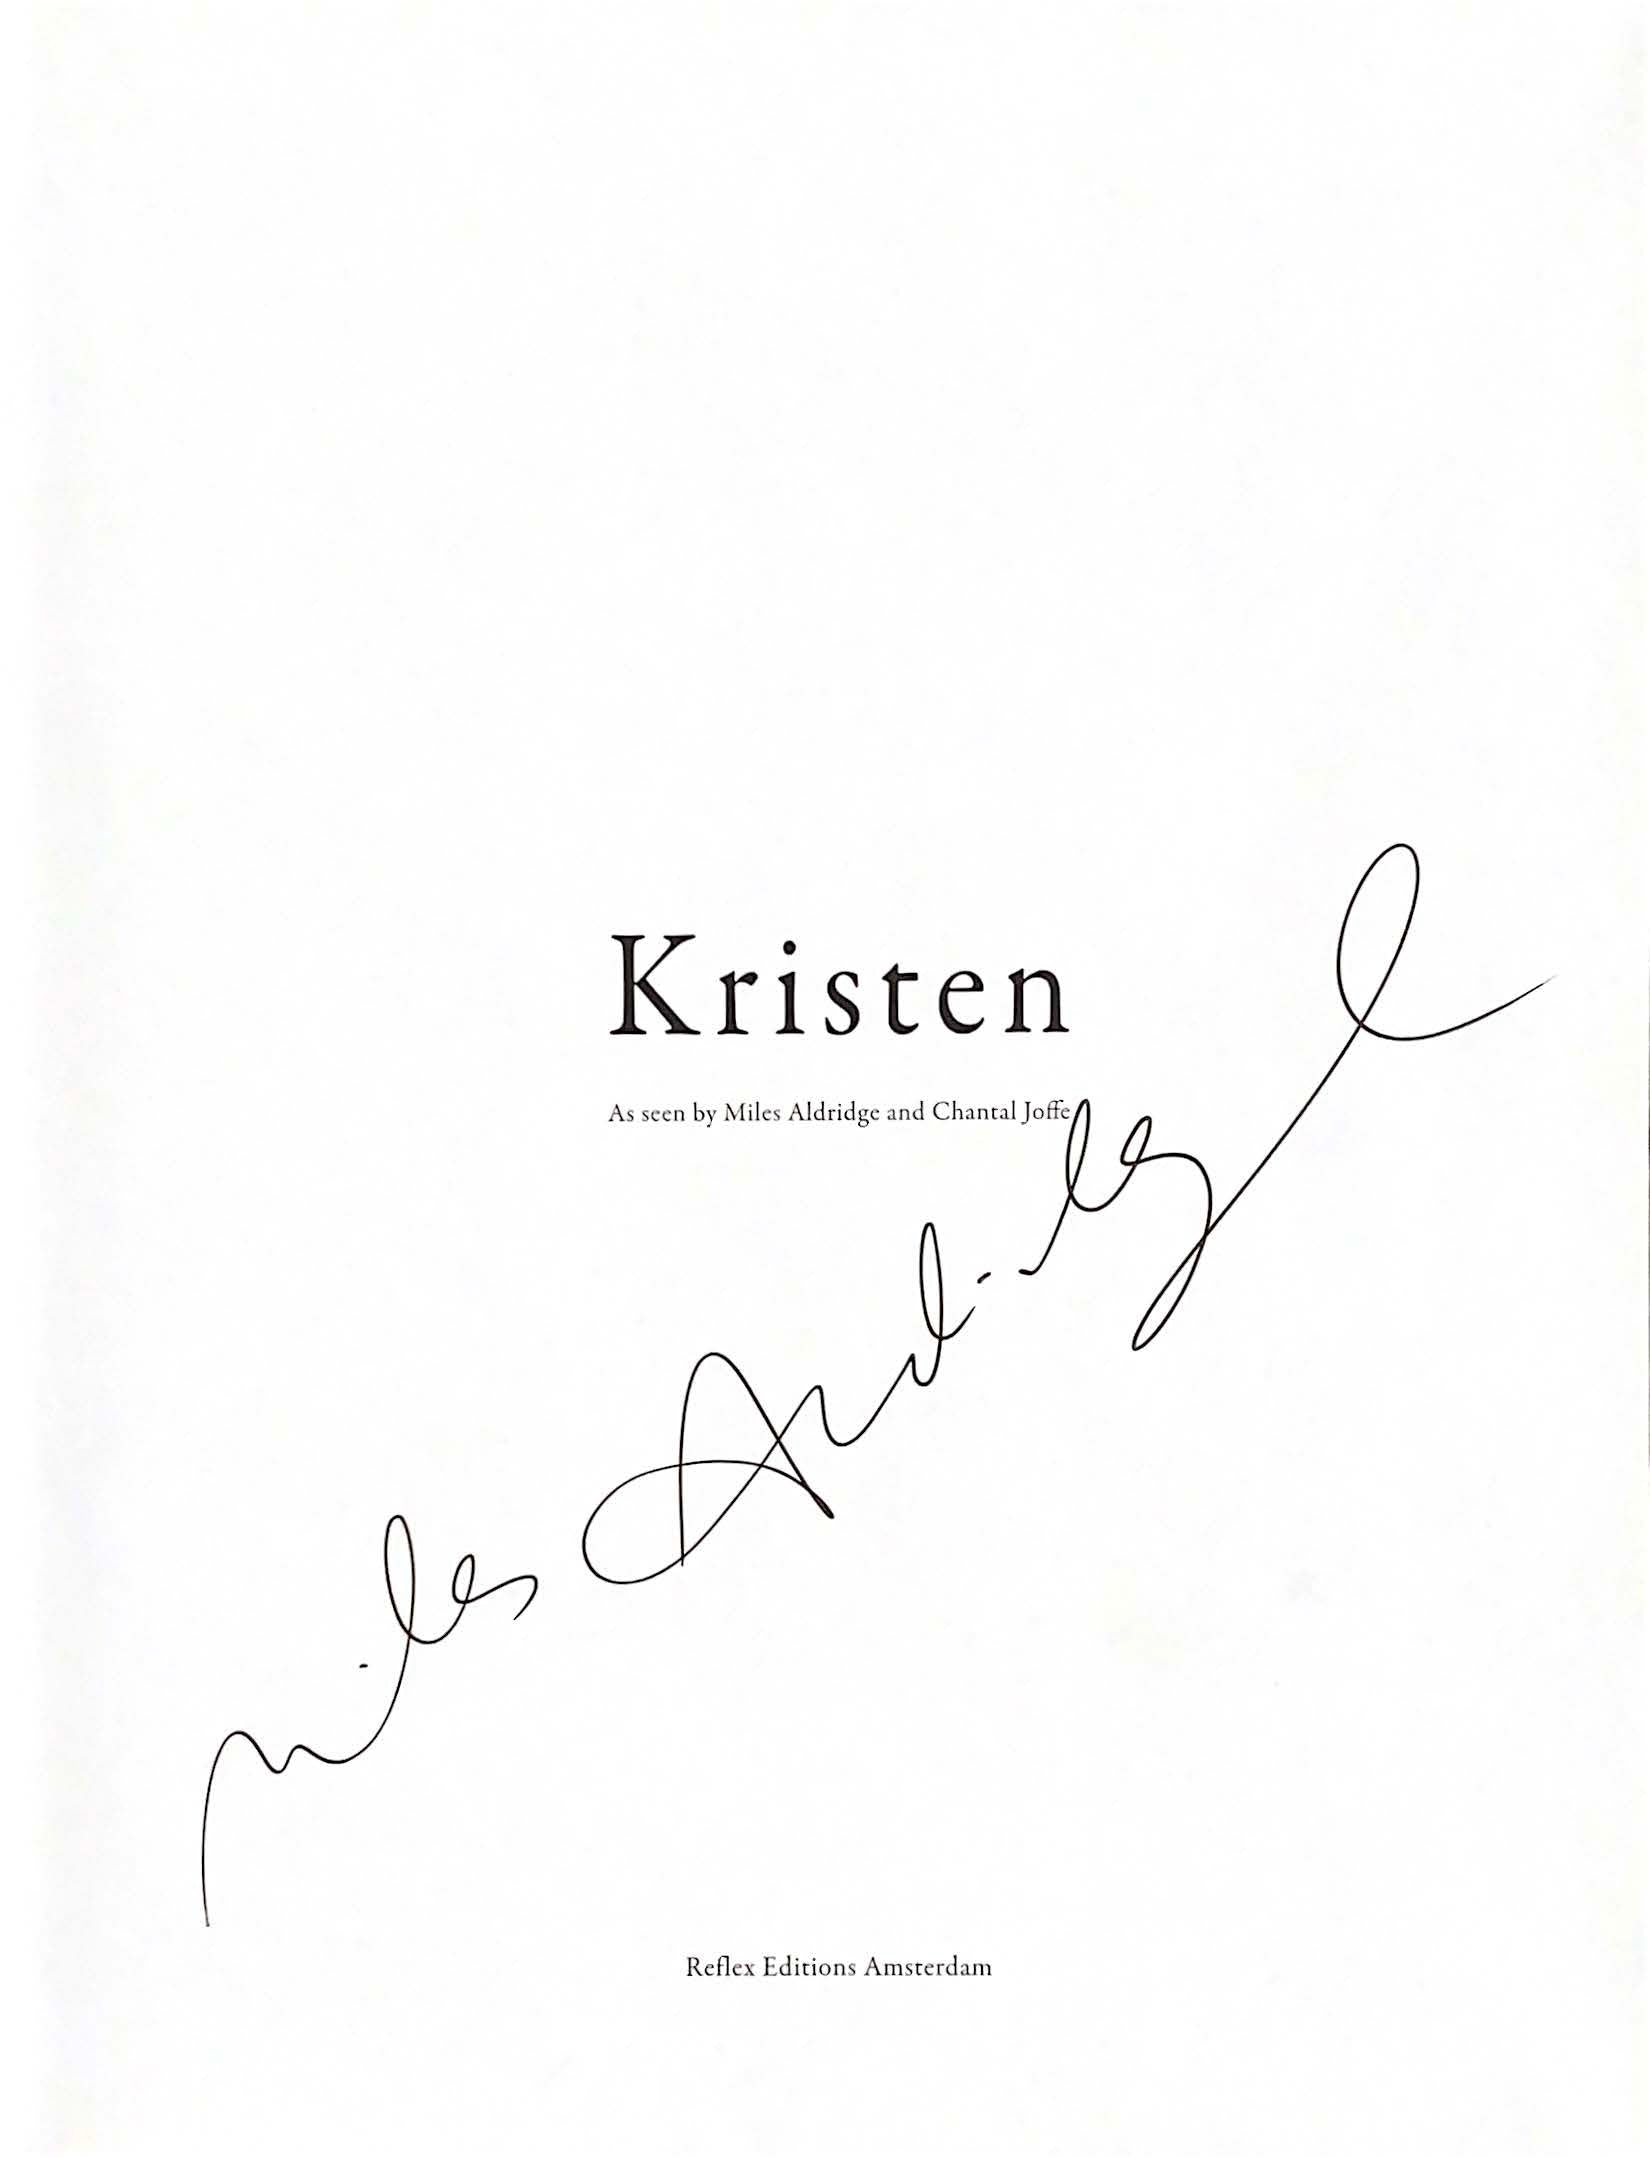 Kristen. As seen by Miles Aldridge and Chantal Joffe. Signed copy.